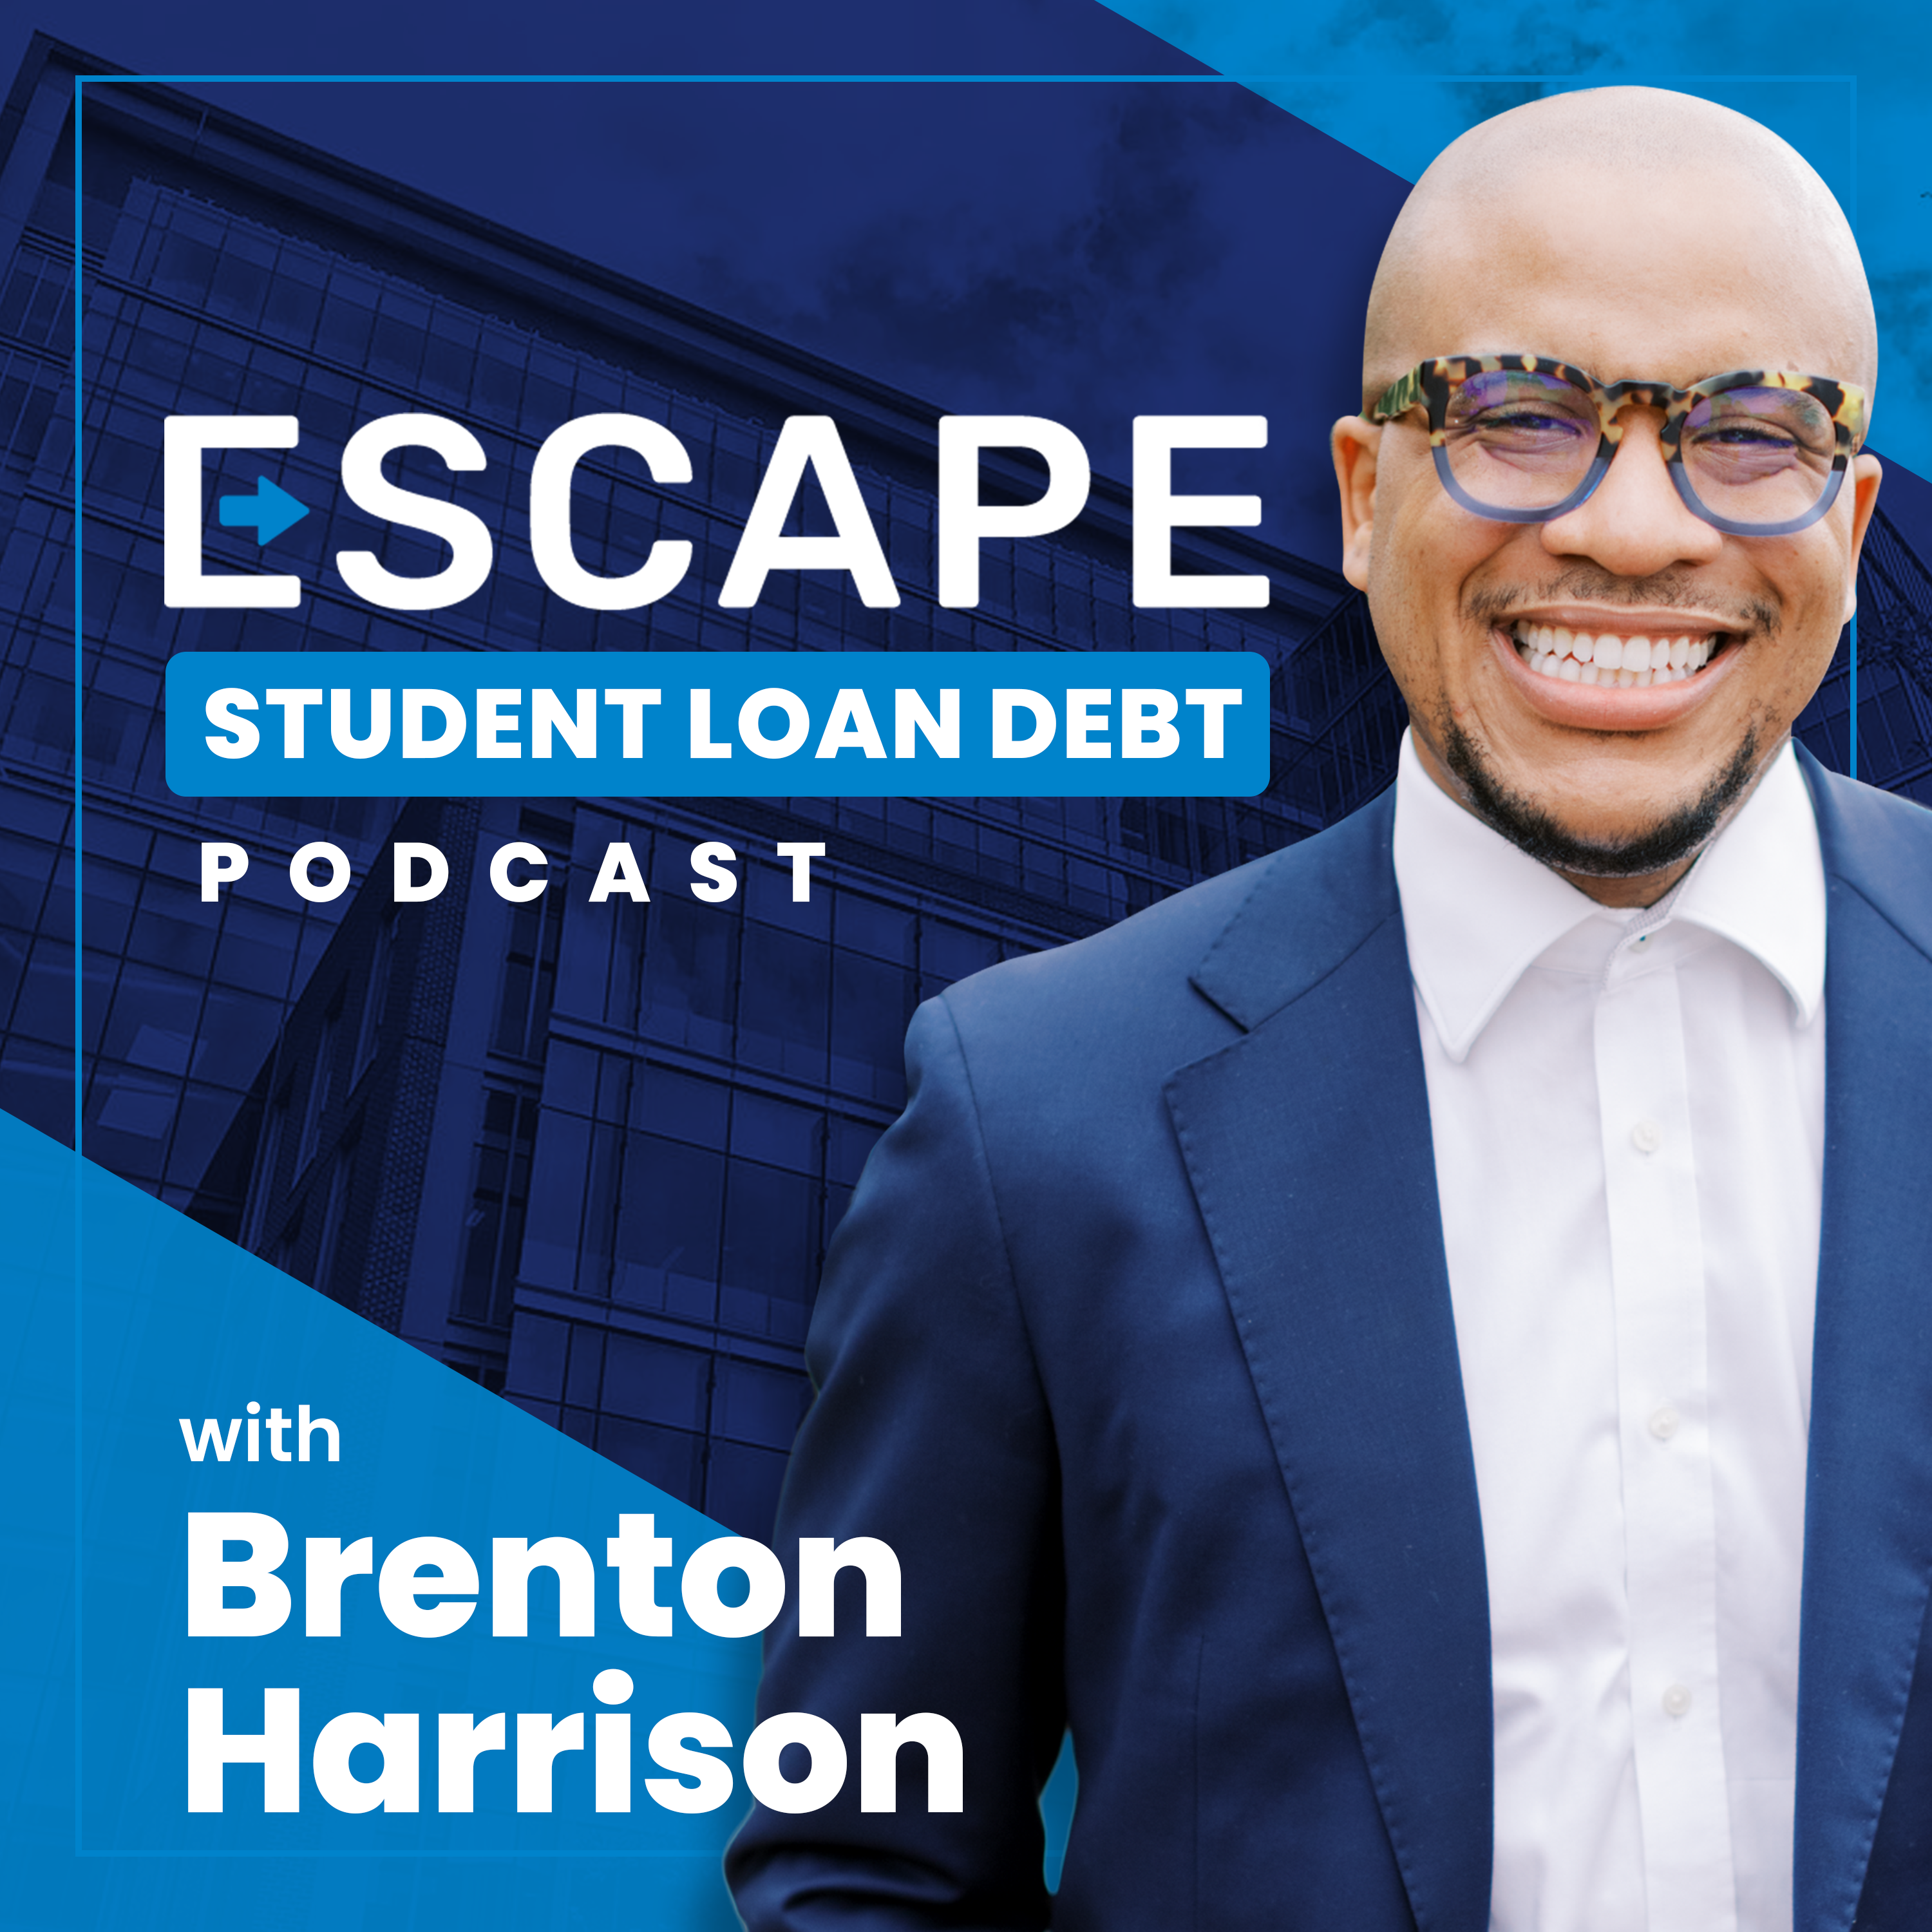 THE ESCAPE STUDENT LOAN DEBT PODCAST